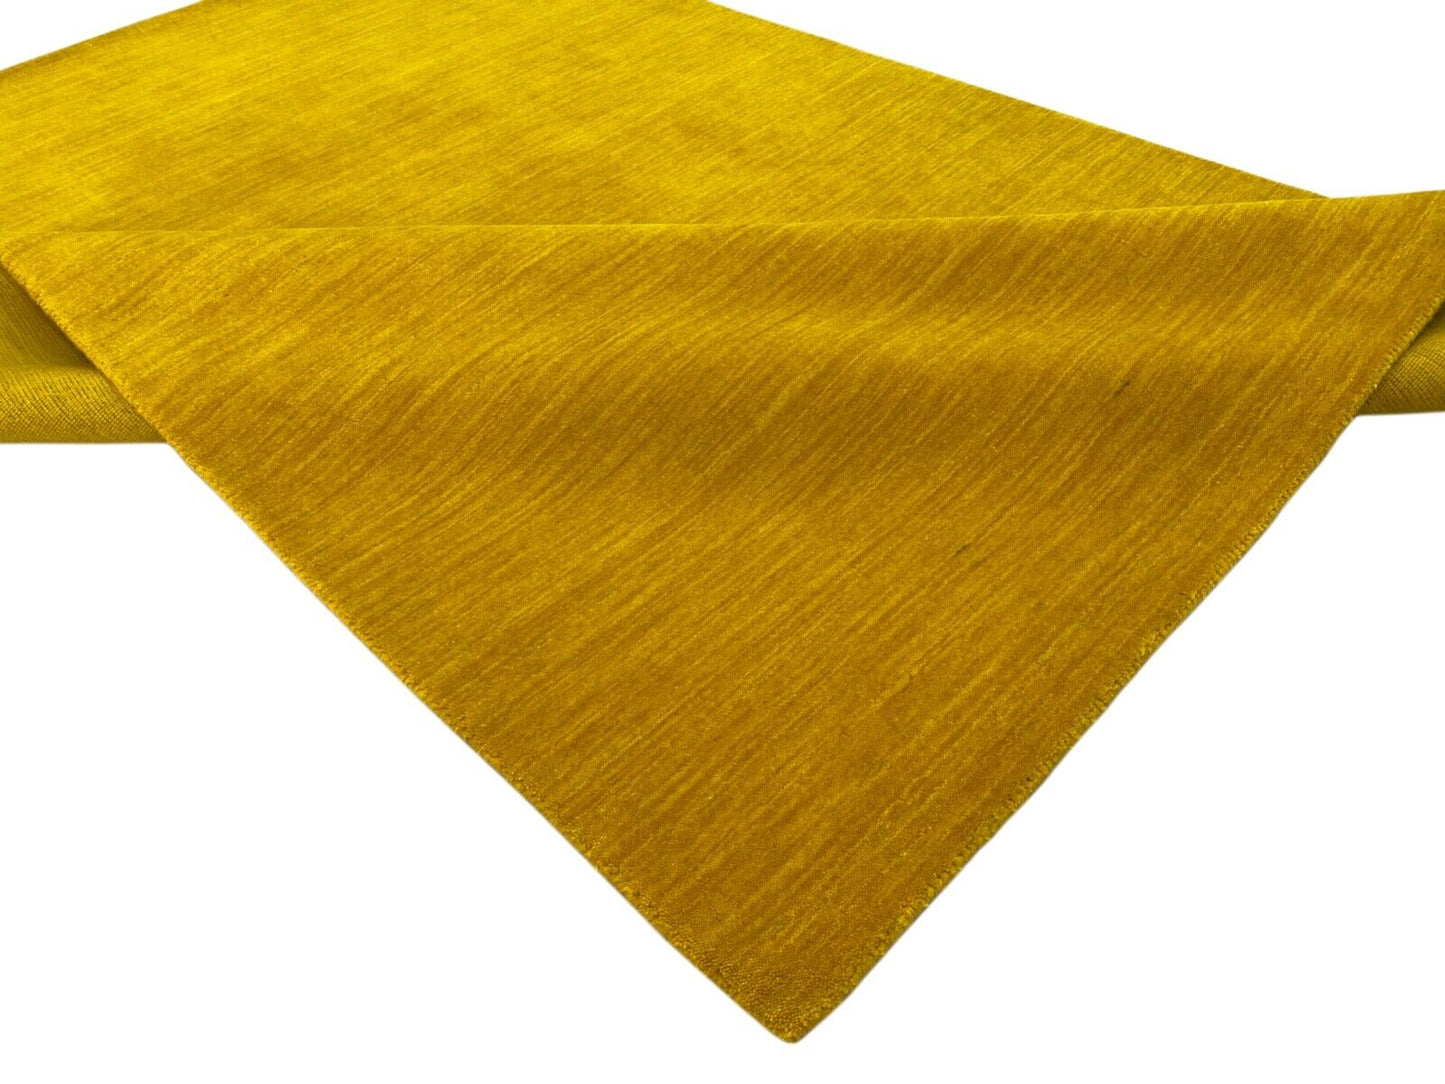 Gabbeh Gold Teppich 140x200 cm Handgewebt 100% Wolle Lori Buff Gelb G630